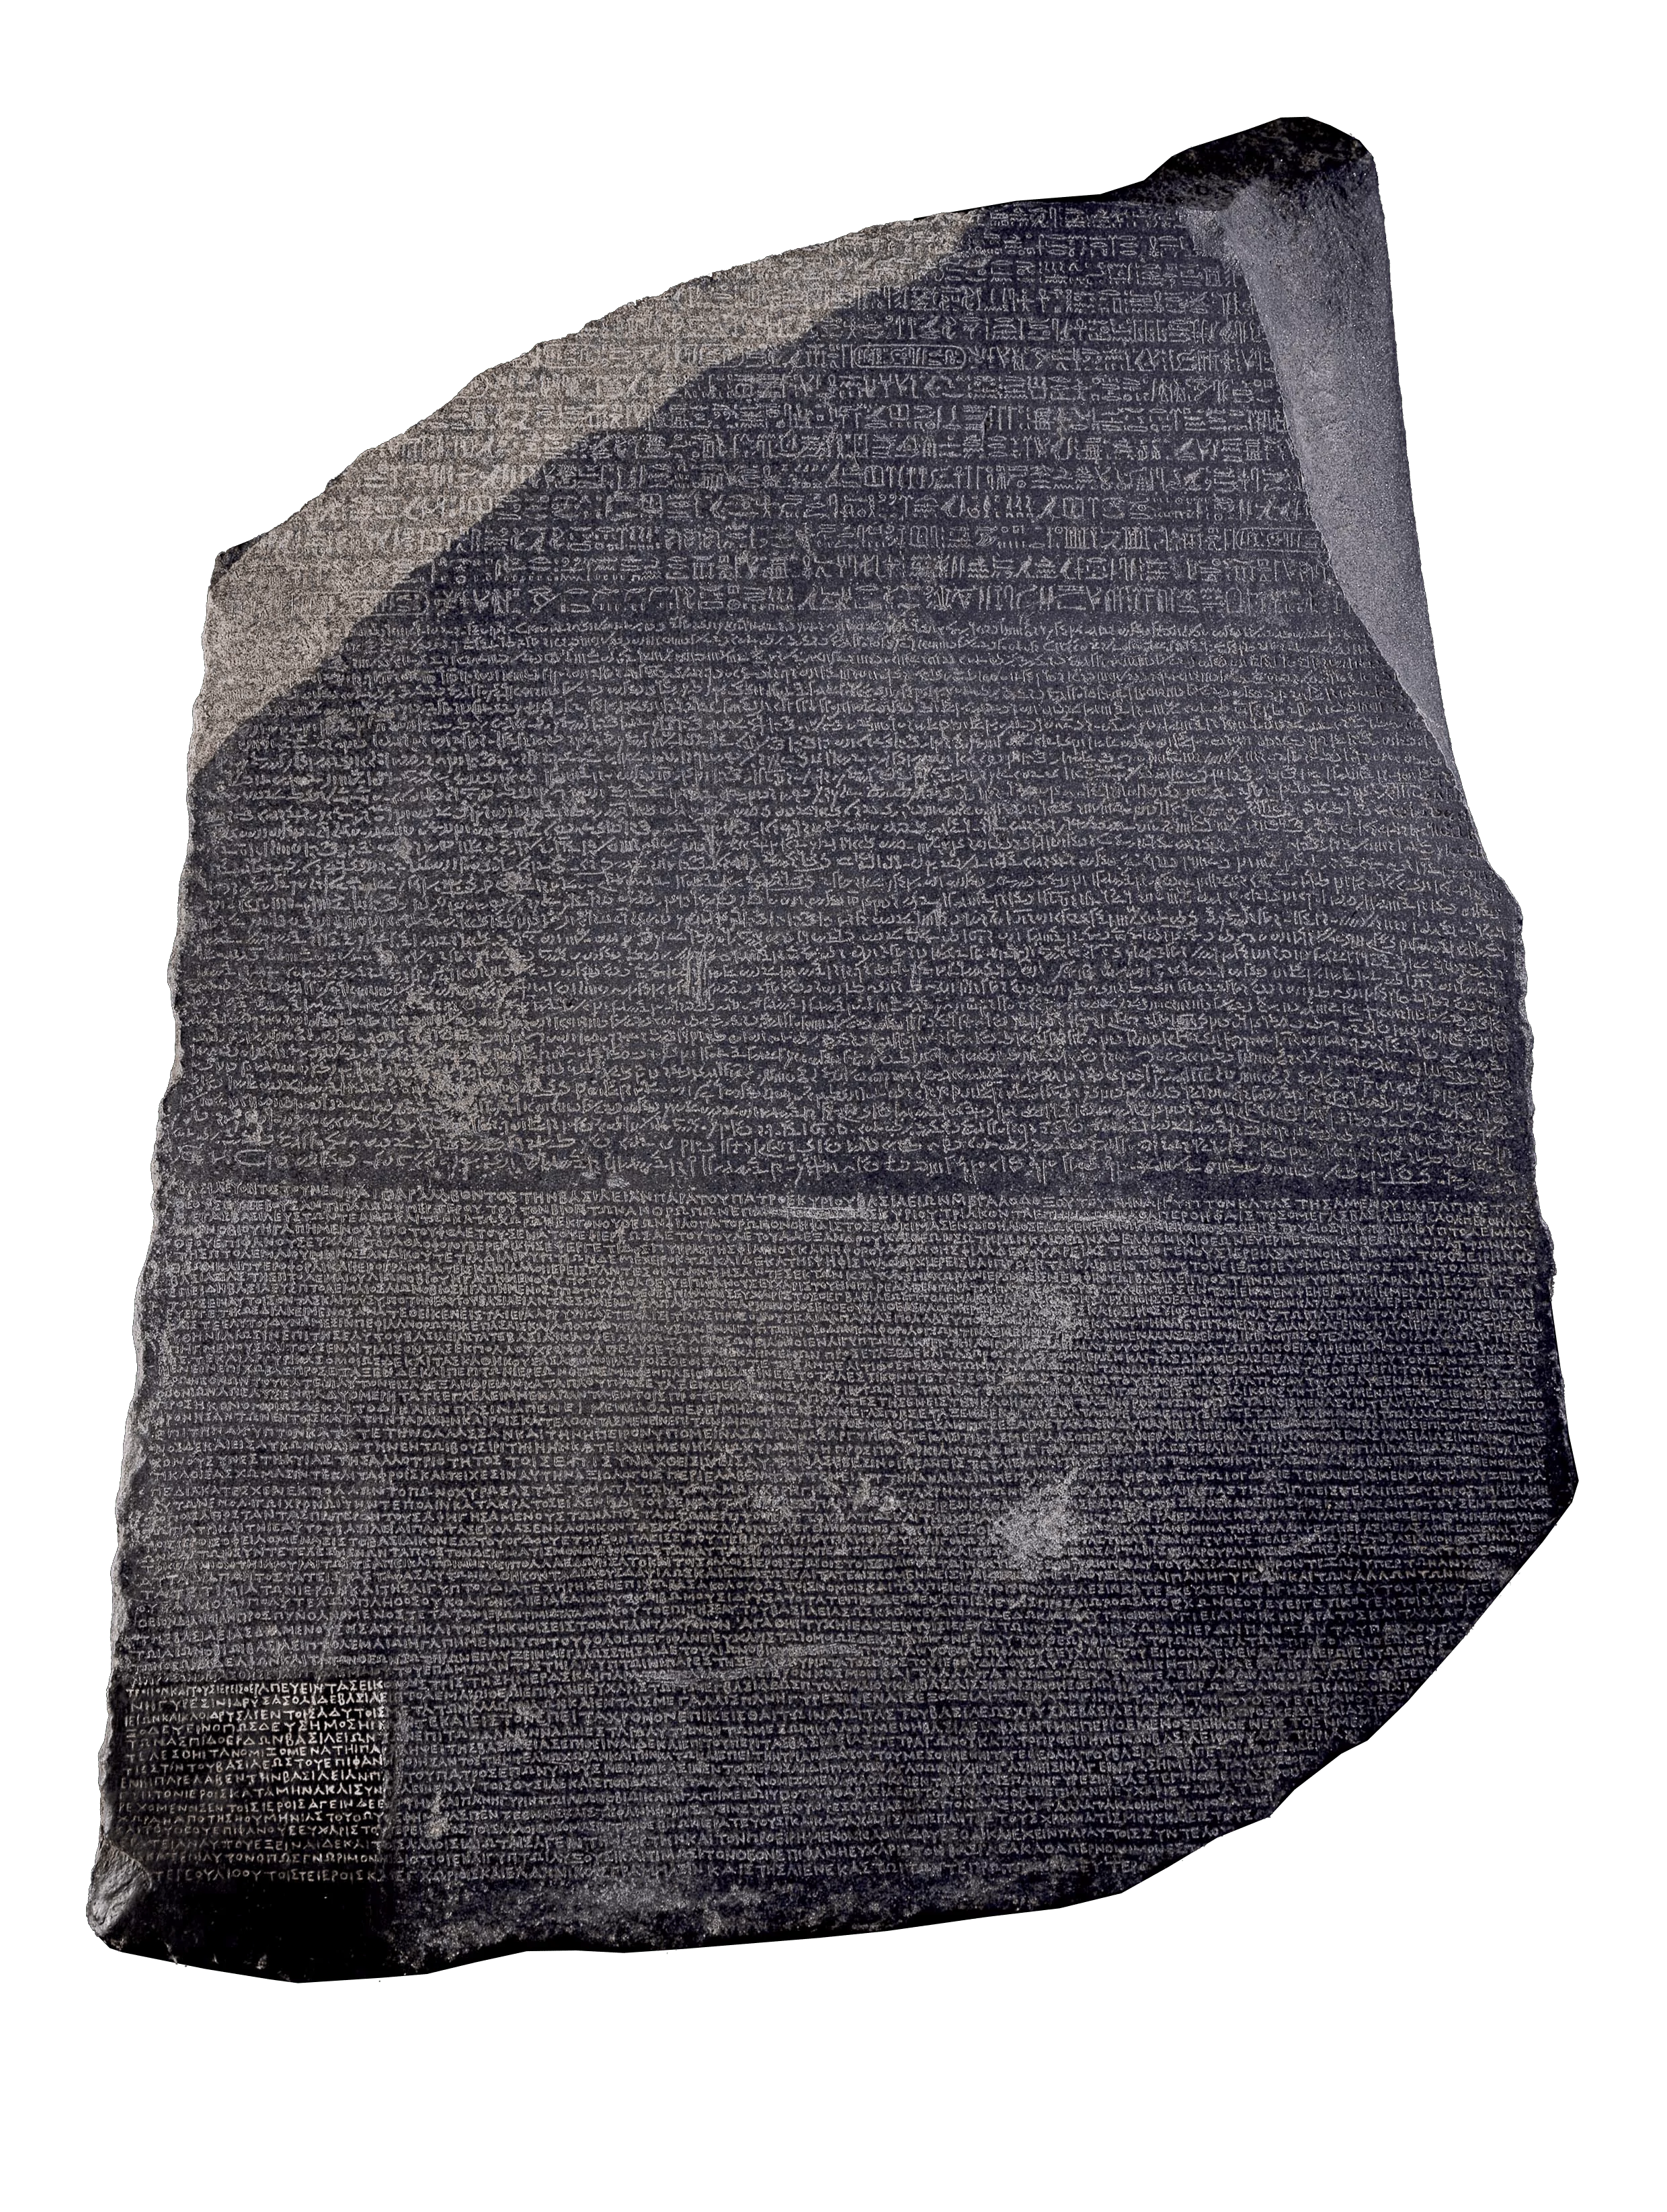 The Rosetta Stone, Ancient Egypt